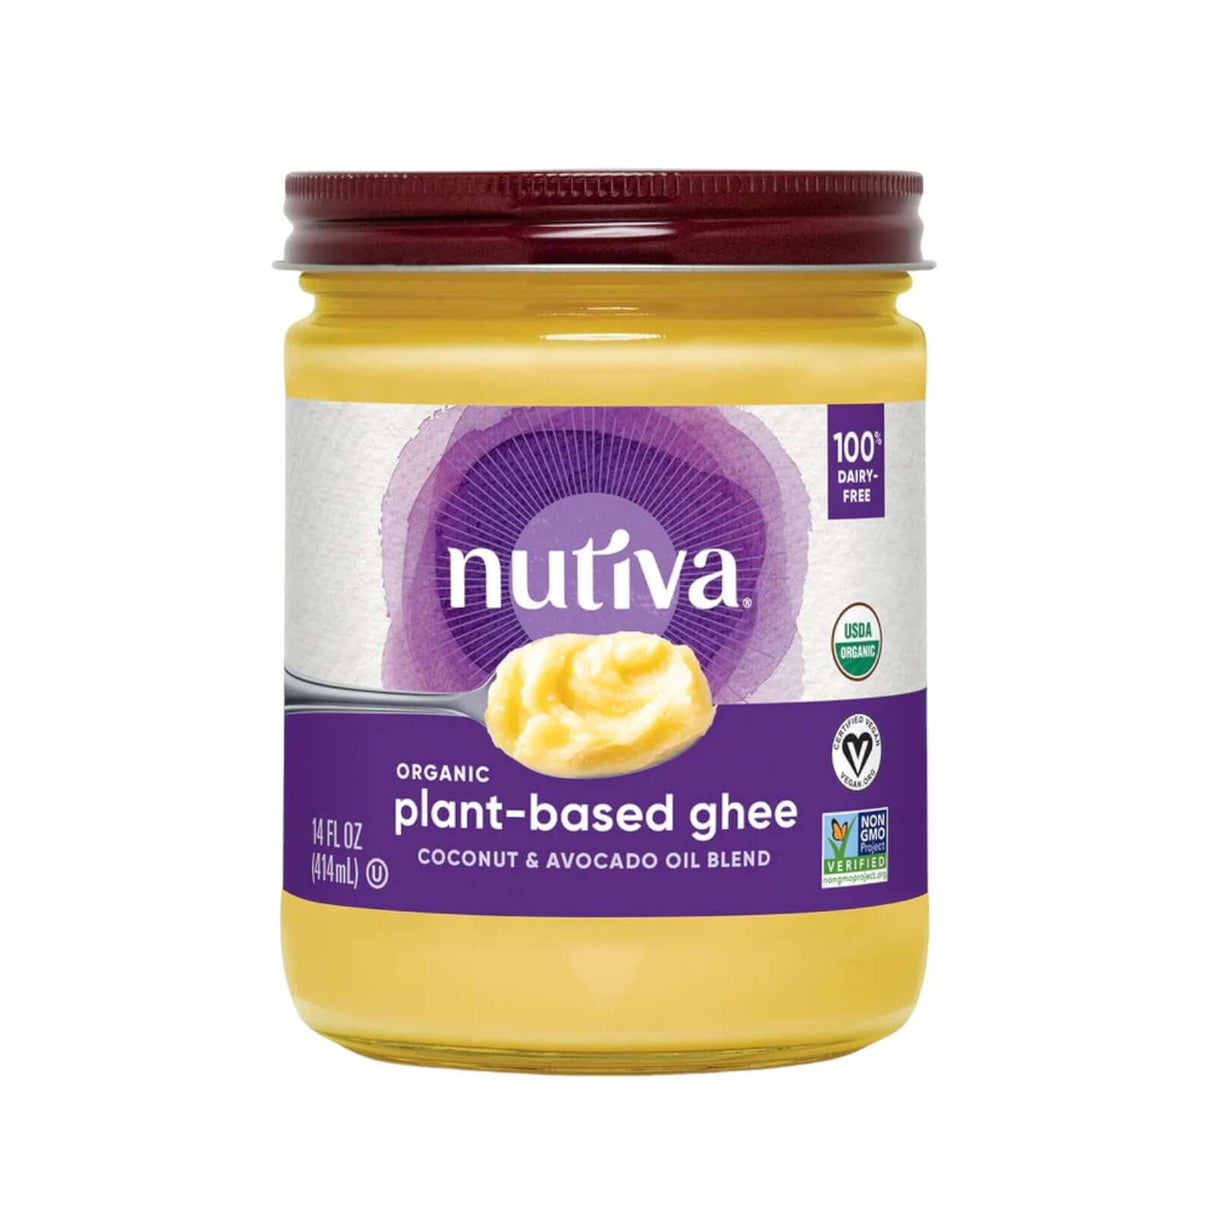 Nutiva Organic Plant-Based Ghee